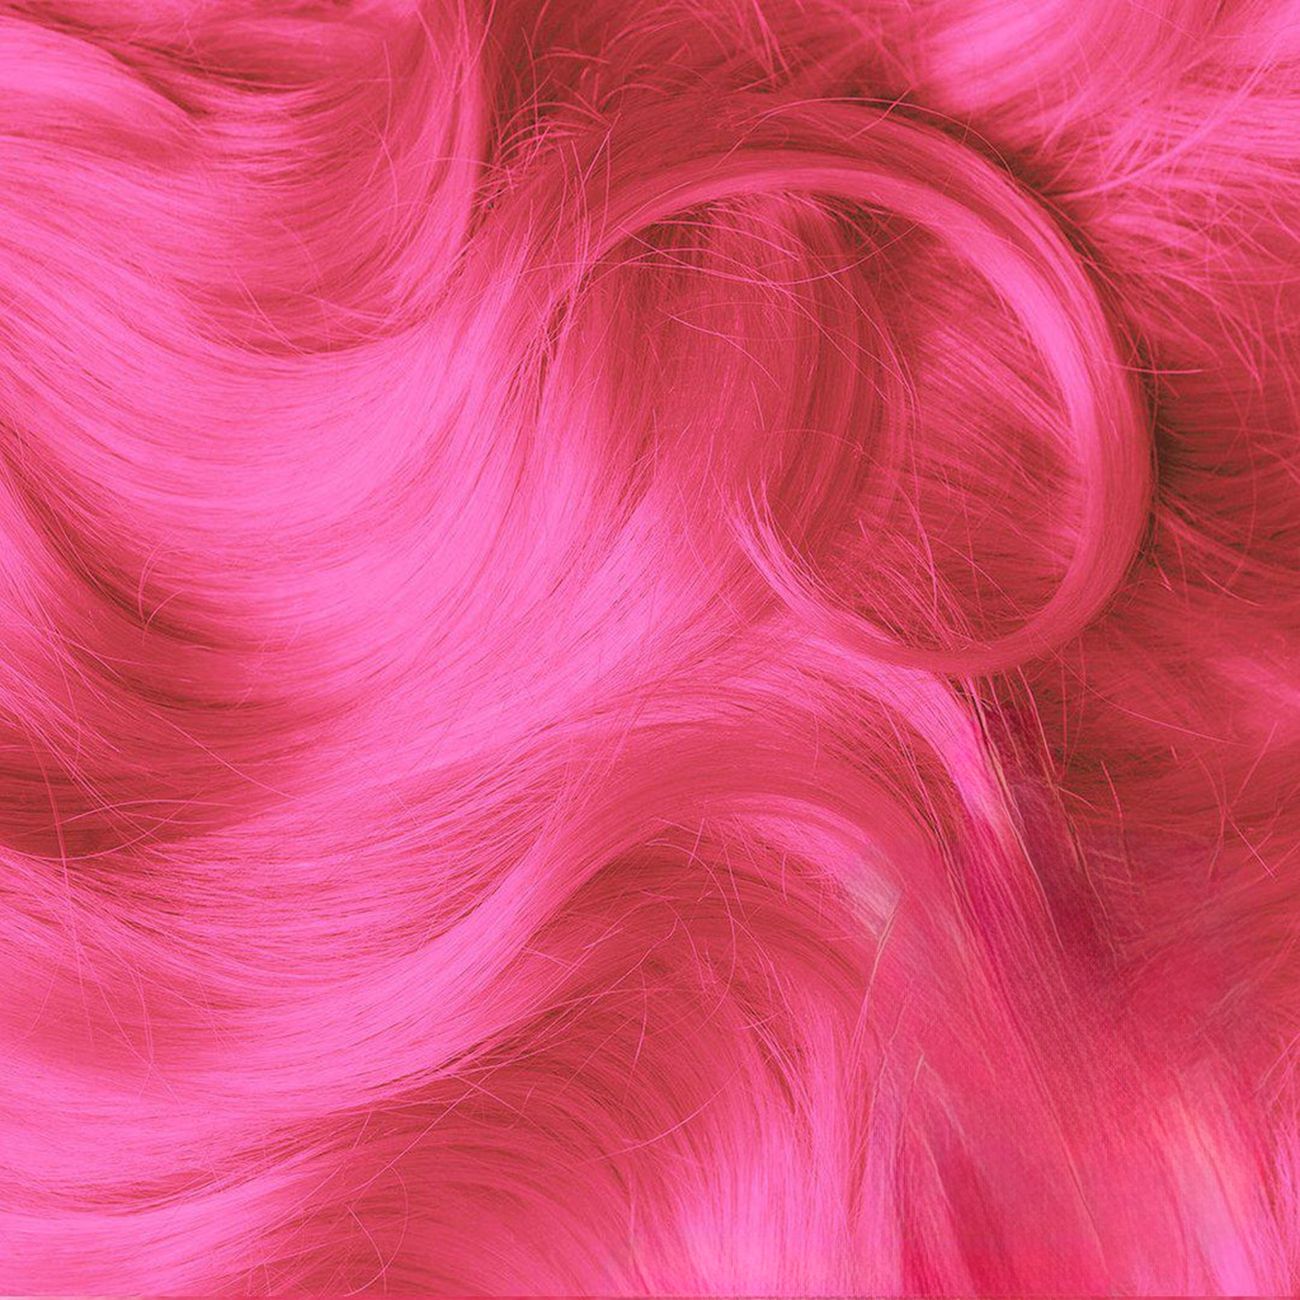 manic-panic-cotton-candy-pink-semi-permanent-harfarg-100648-2